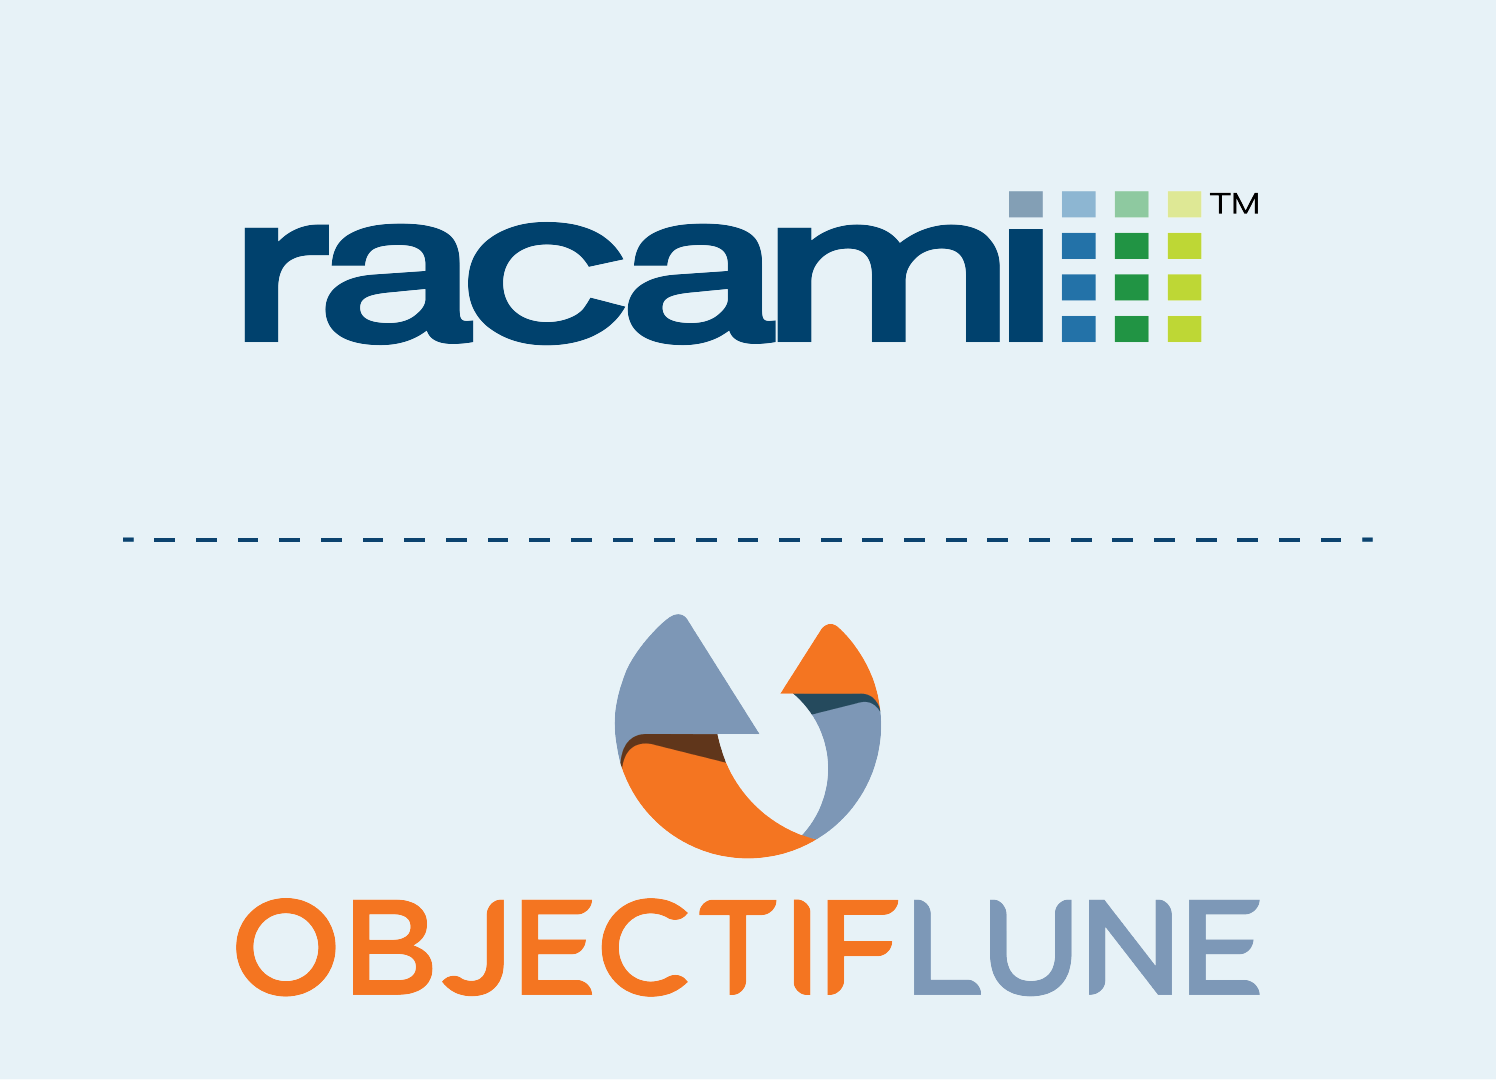 Racami Announces Sales and Services for Objectif Lune’s Document Composition Software